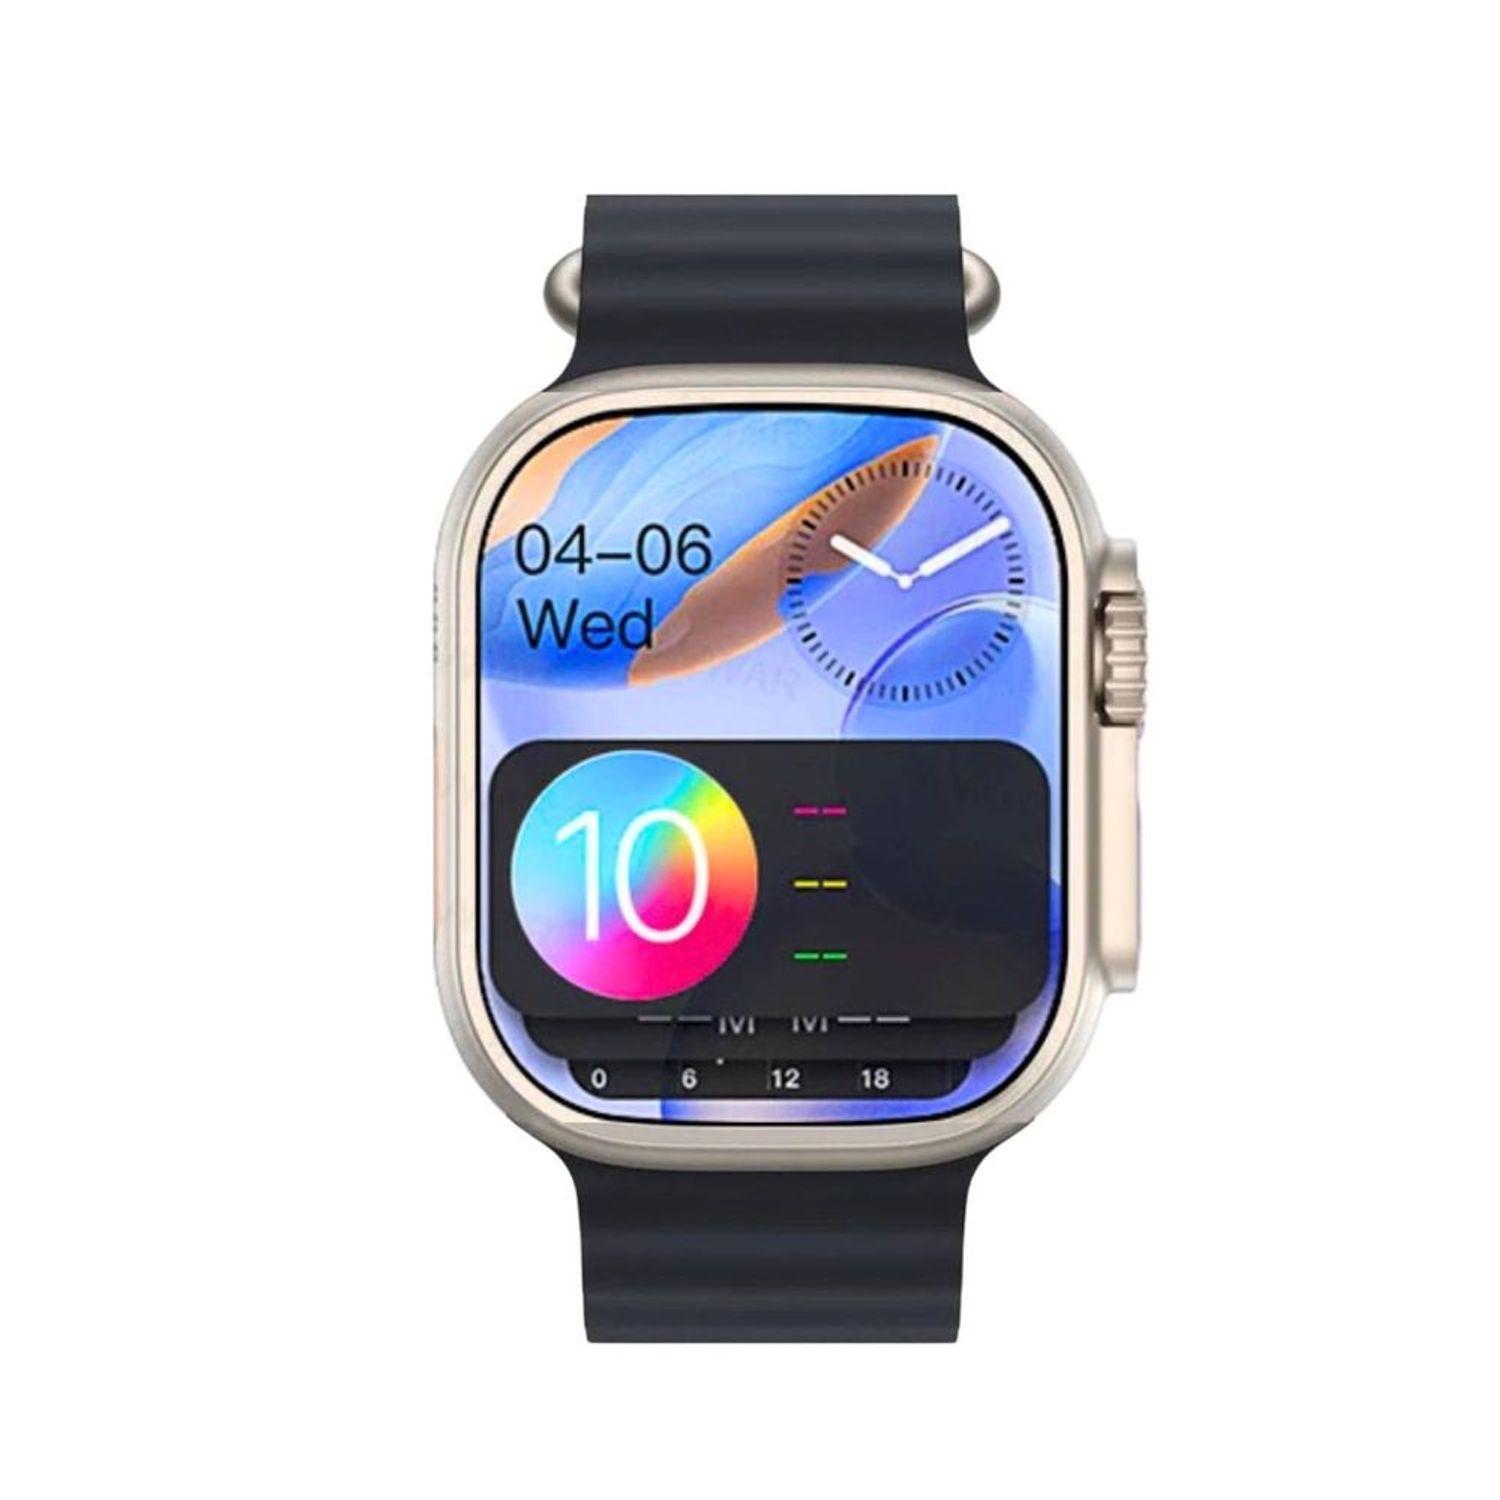 Pack Smartwatch Hello Watch 3 Negro 4GB Amoled Acuatico y Audífonos Air 39  Negro I Oechsle - Oechsle